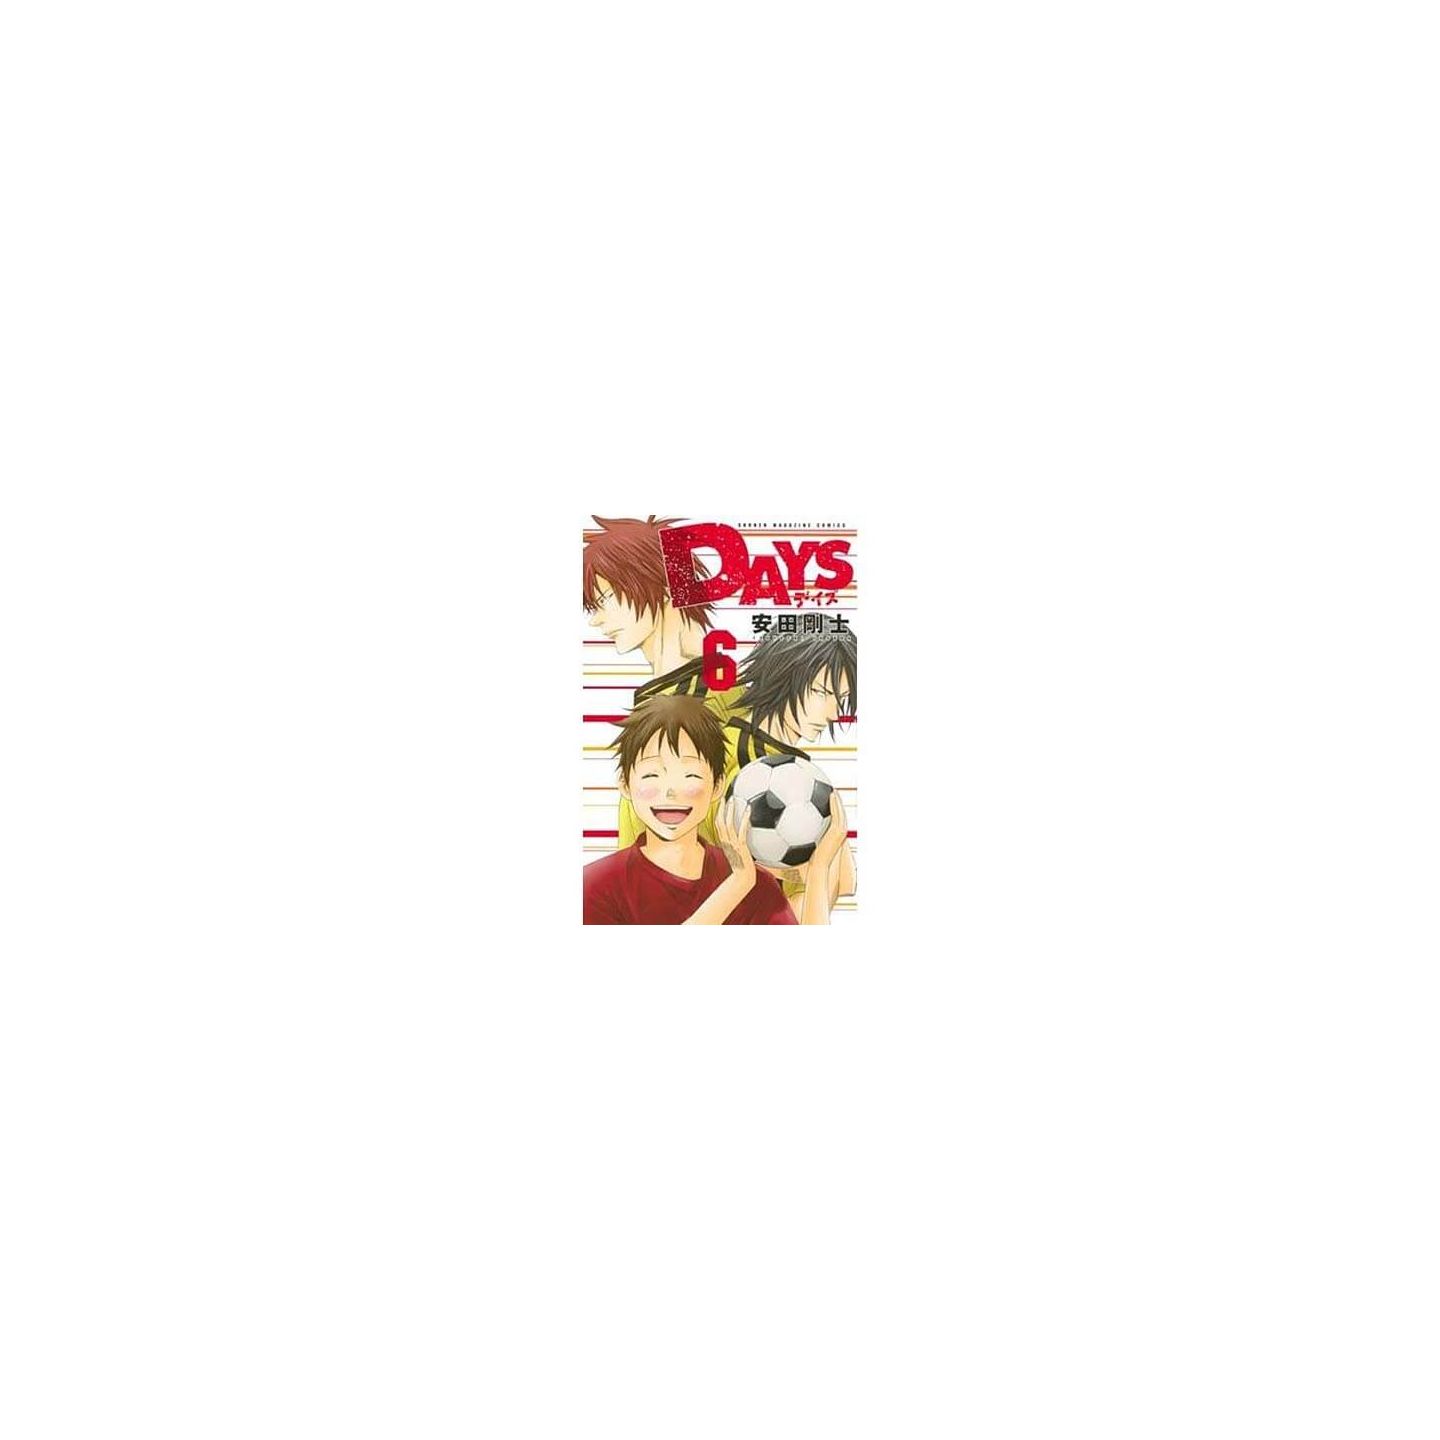 DAYS vol.6 - Kodansha Comics (Japanese version)